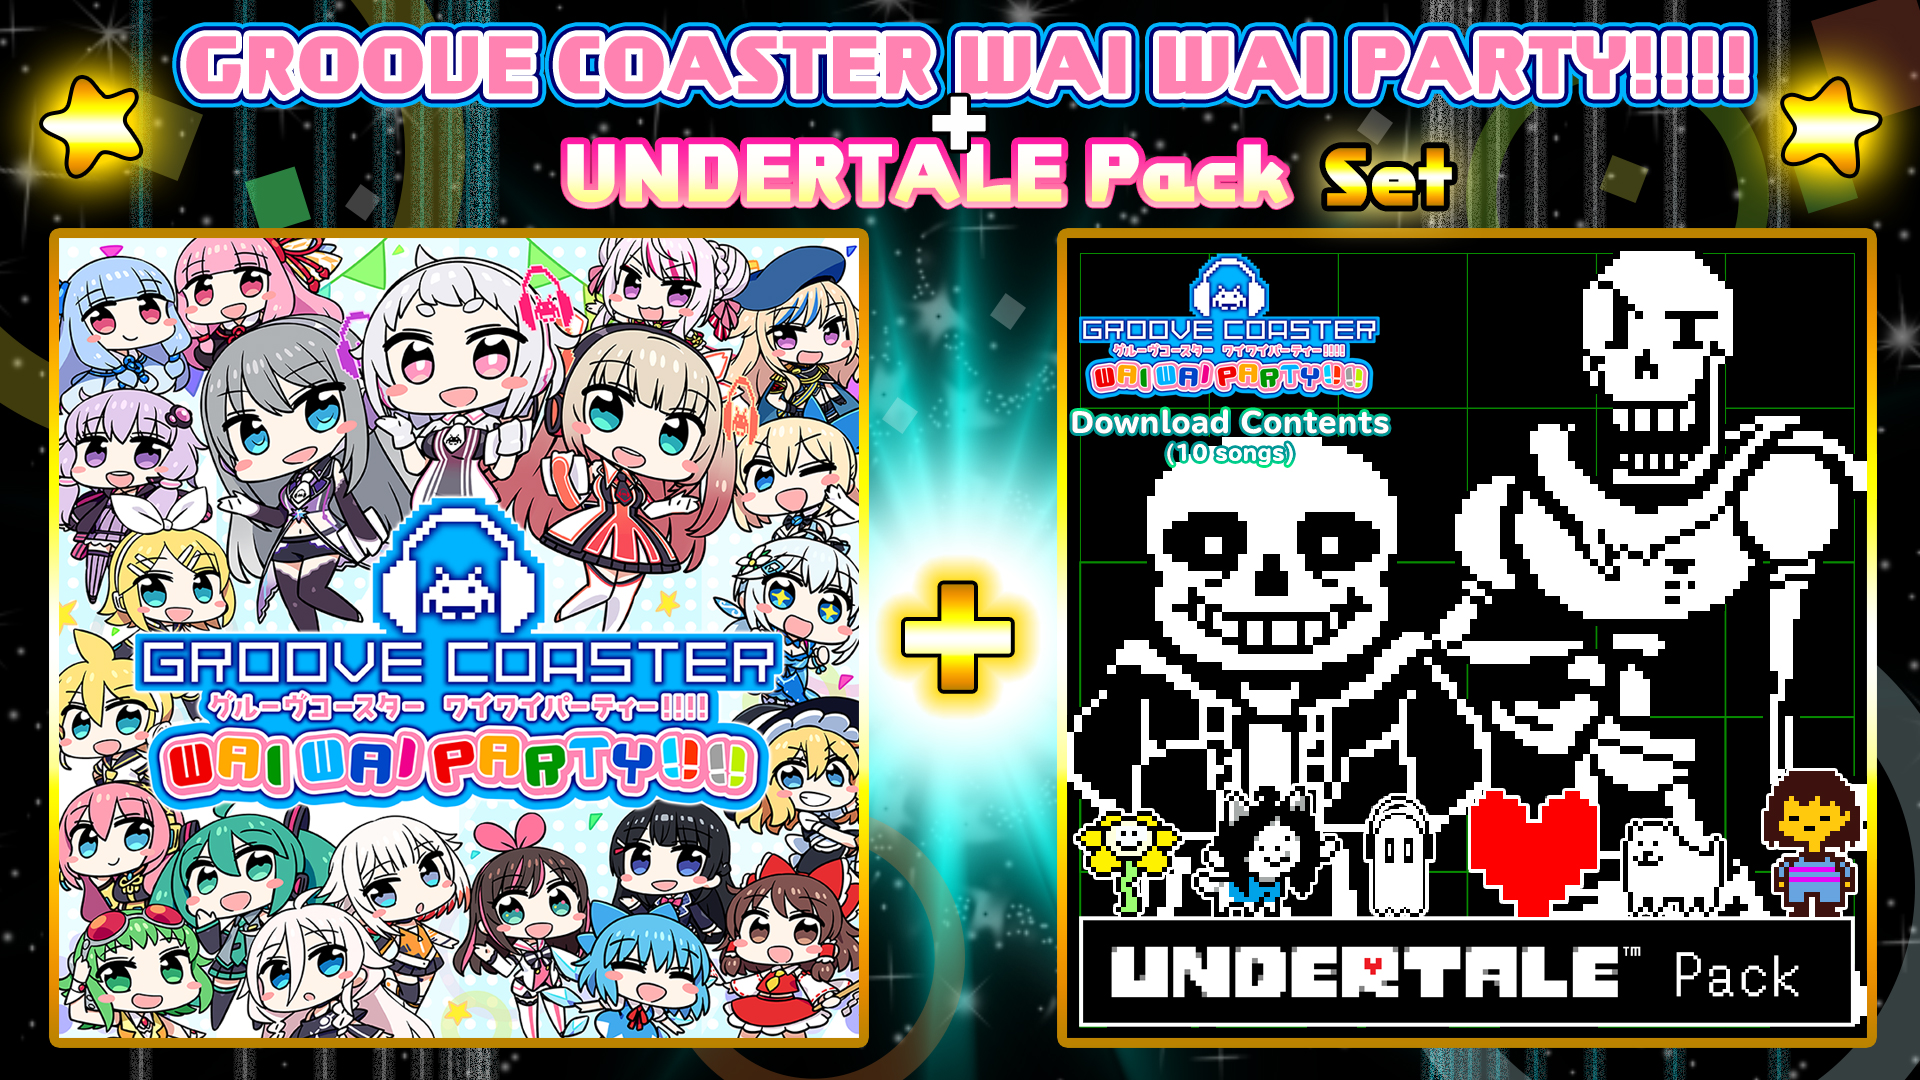 Groove Coaster Wai Wai Party Undertale Pack Value Bundle Bundle Nintendo Switch Nintendo